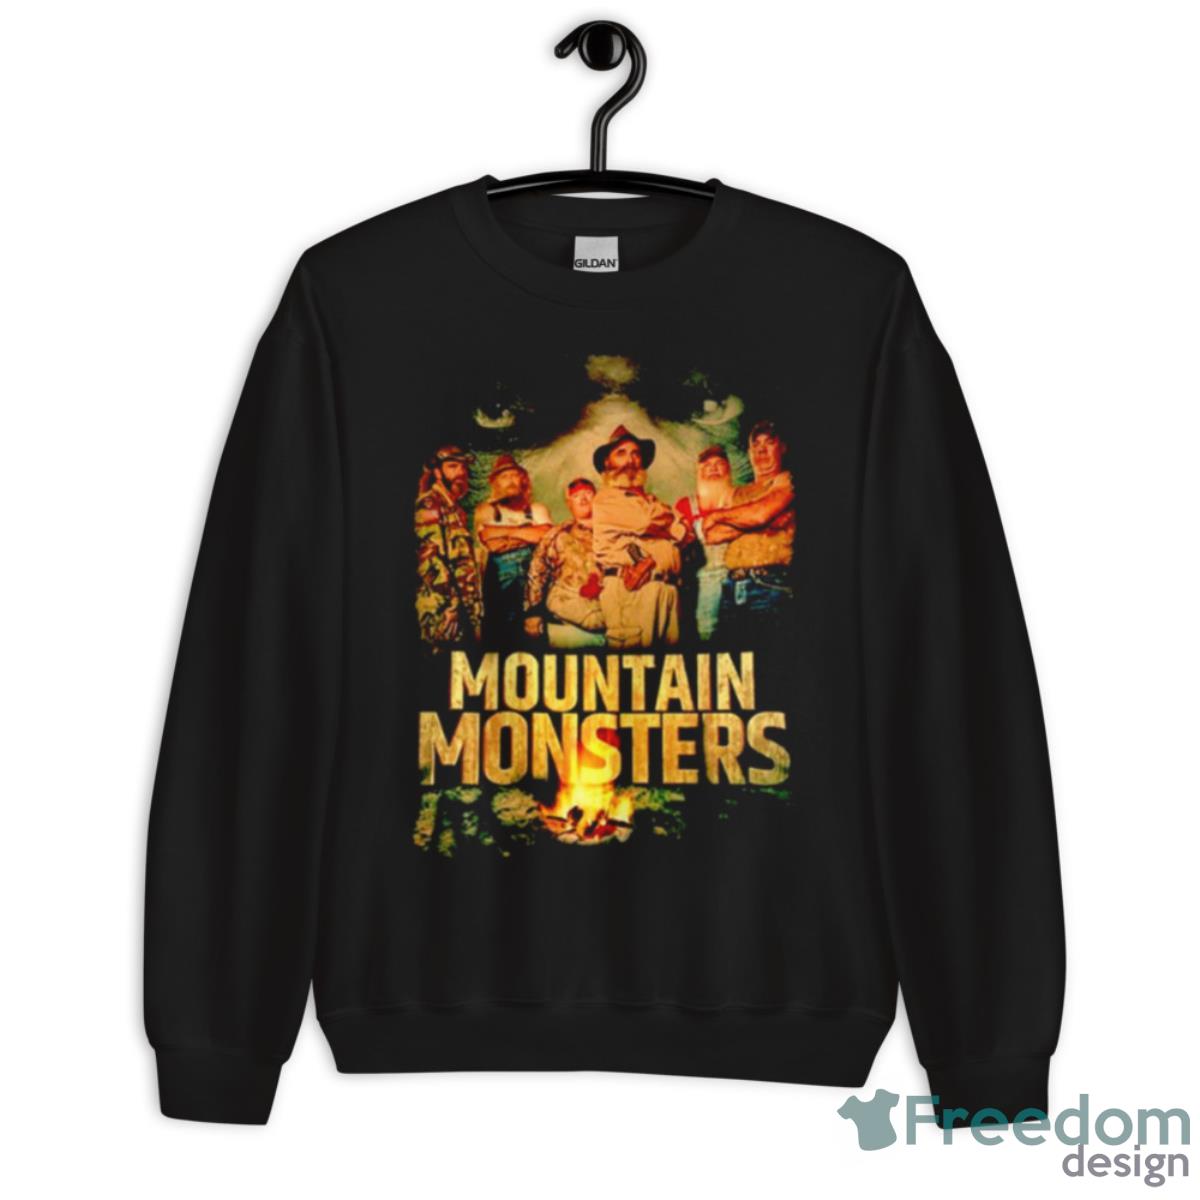 Mountain Monsters Shirt